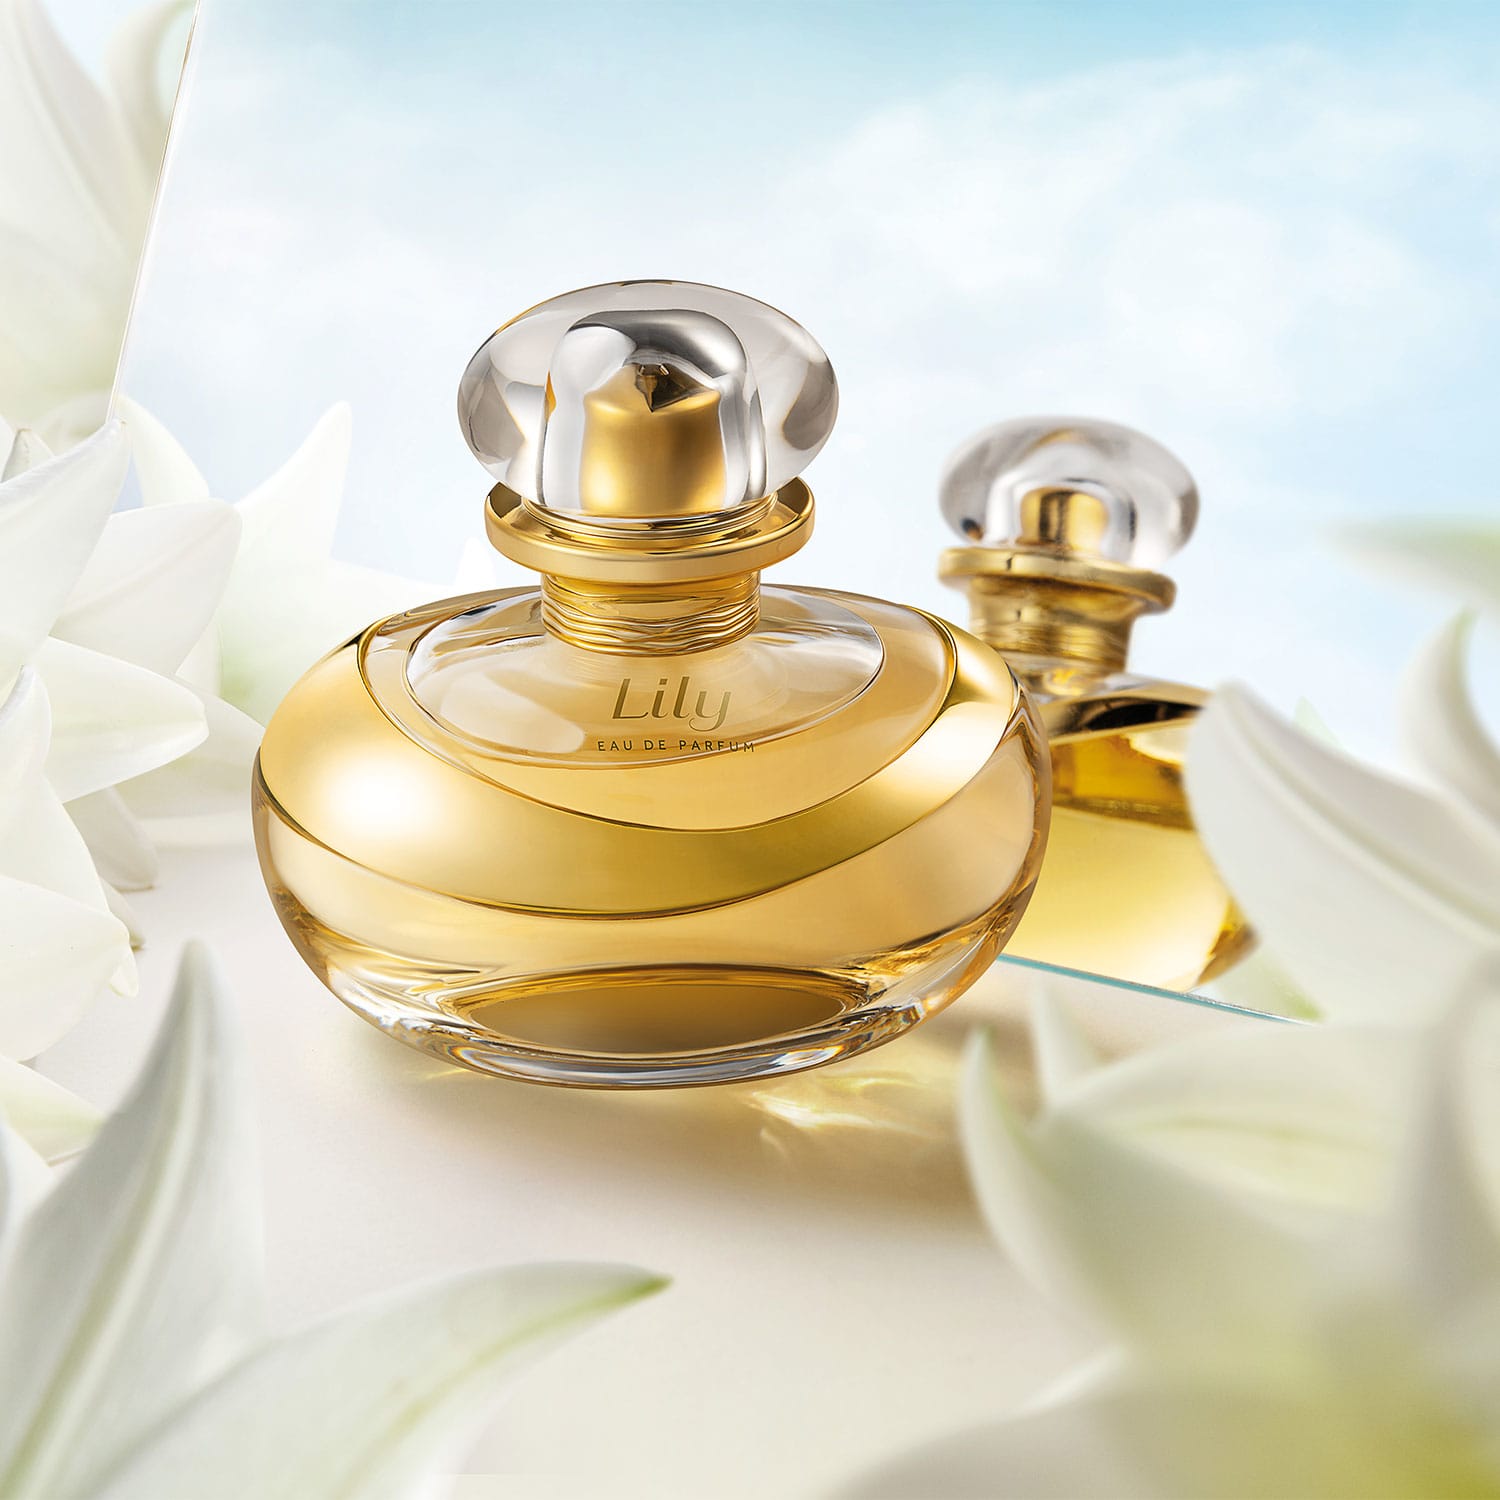 My Lily O Boticário perfume - a fragrance for women 2016